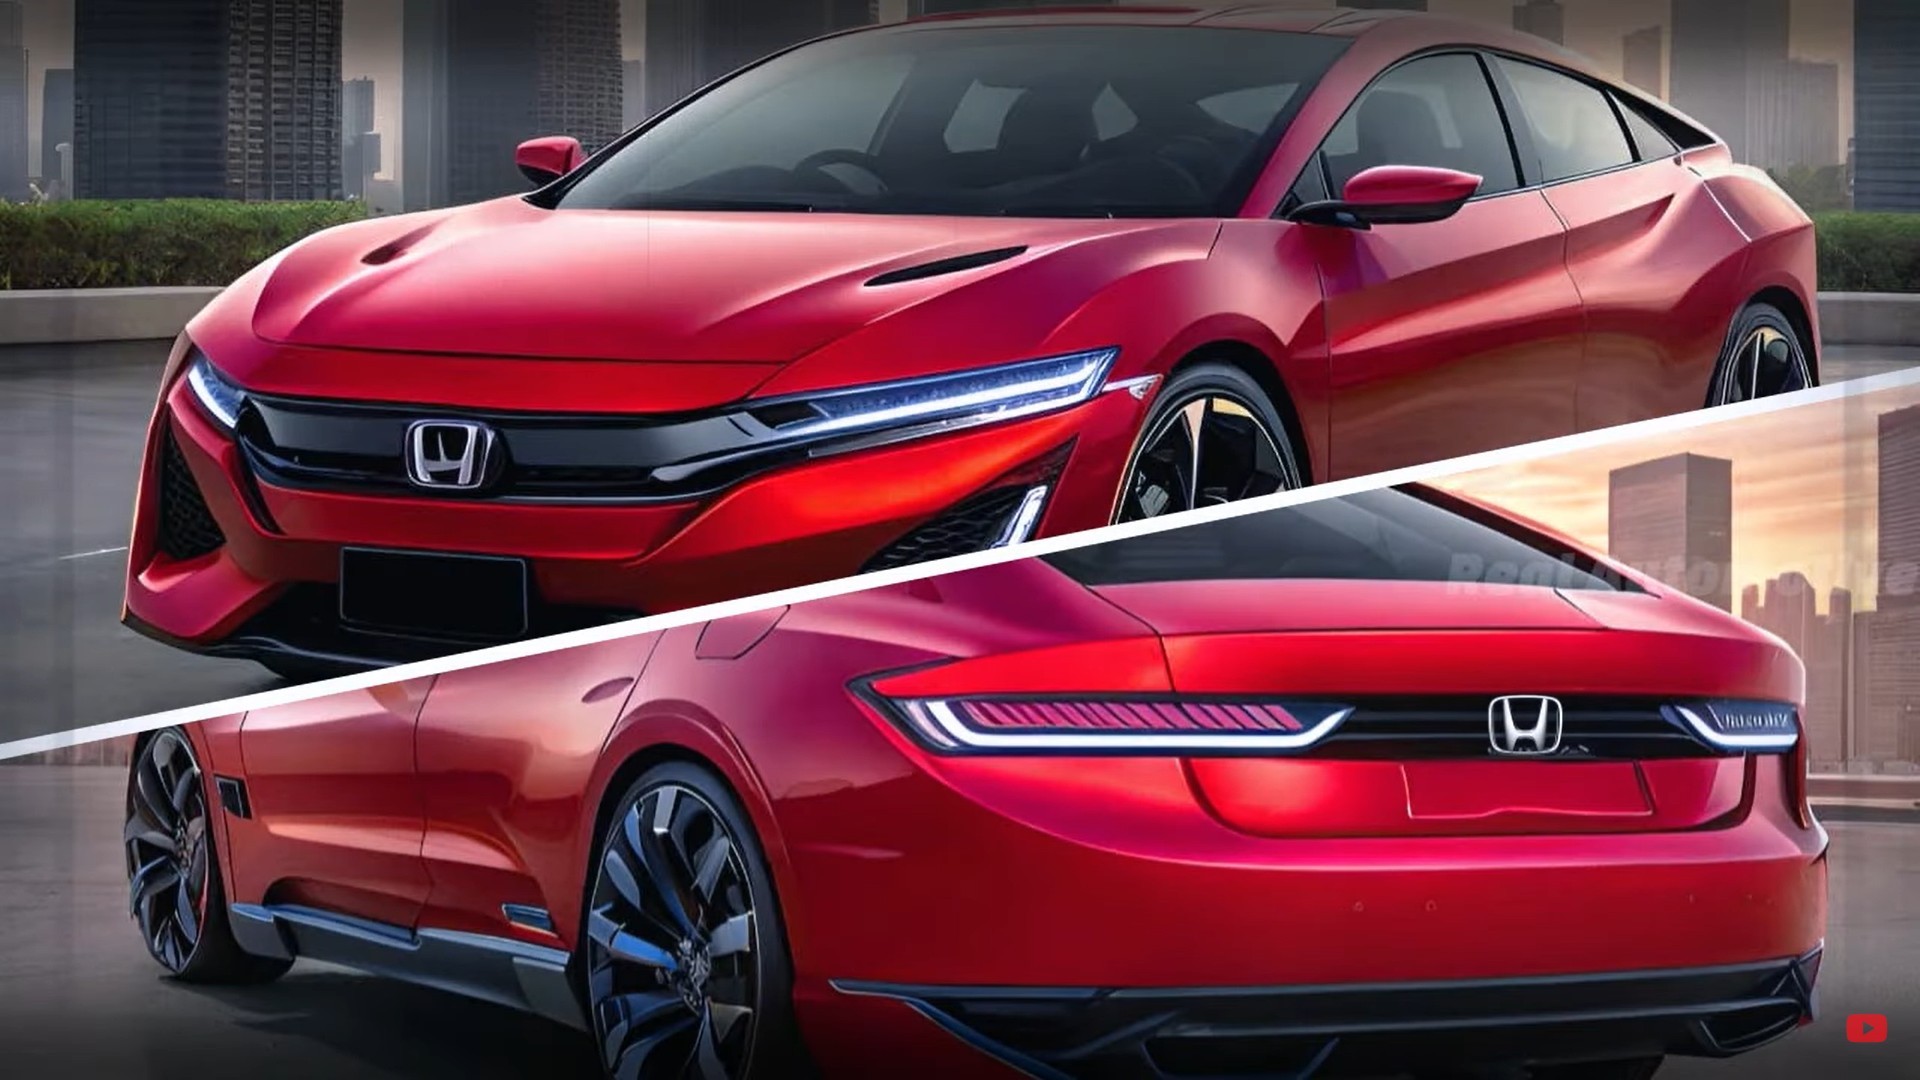 Virtually Upgraded 2025 Honda Accord Hybrid and Touring Models Look